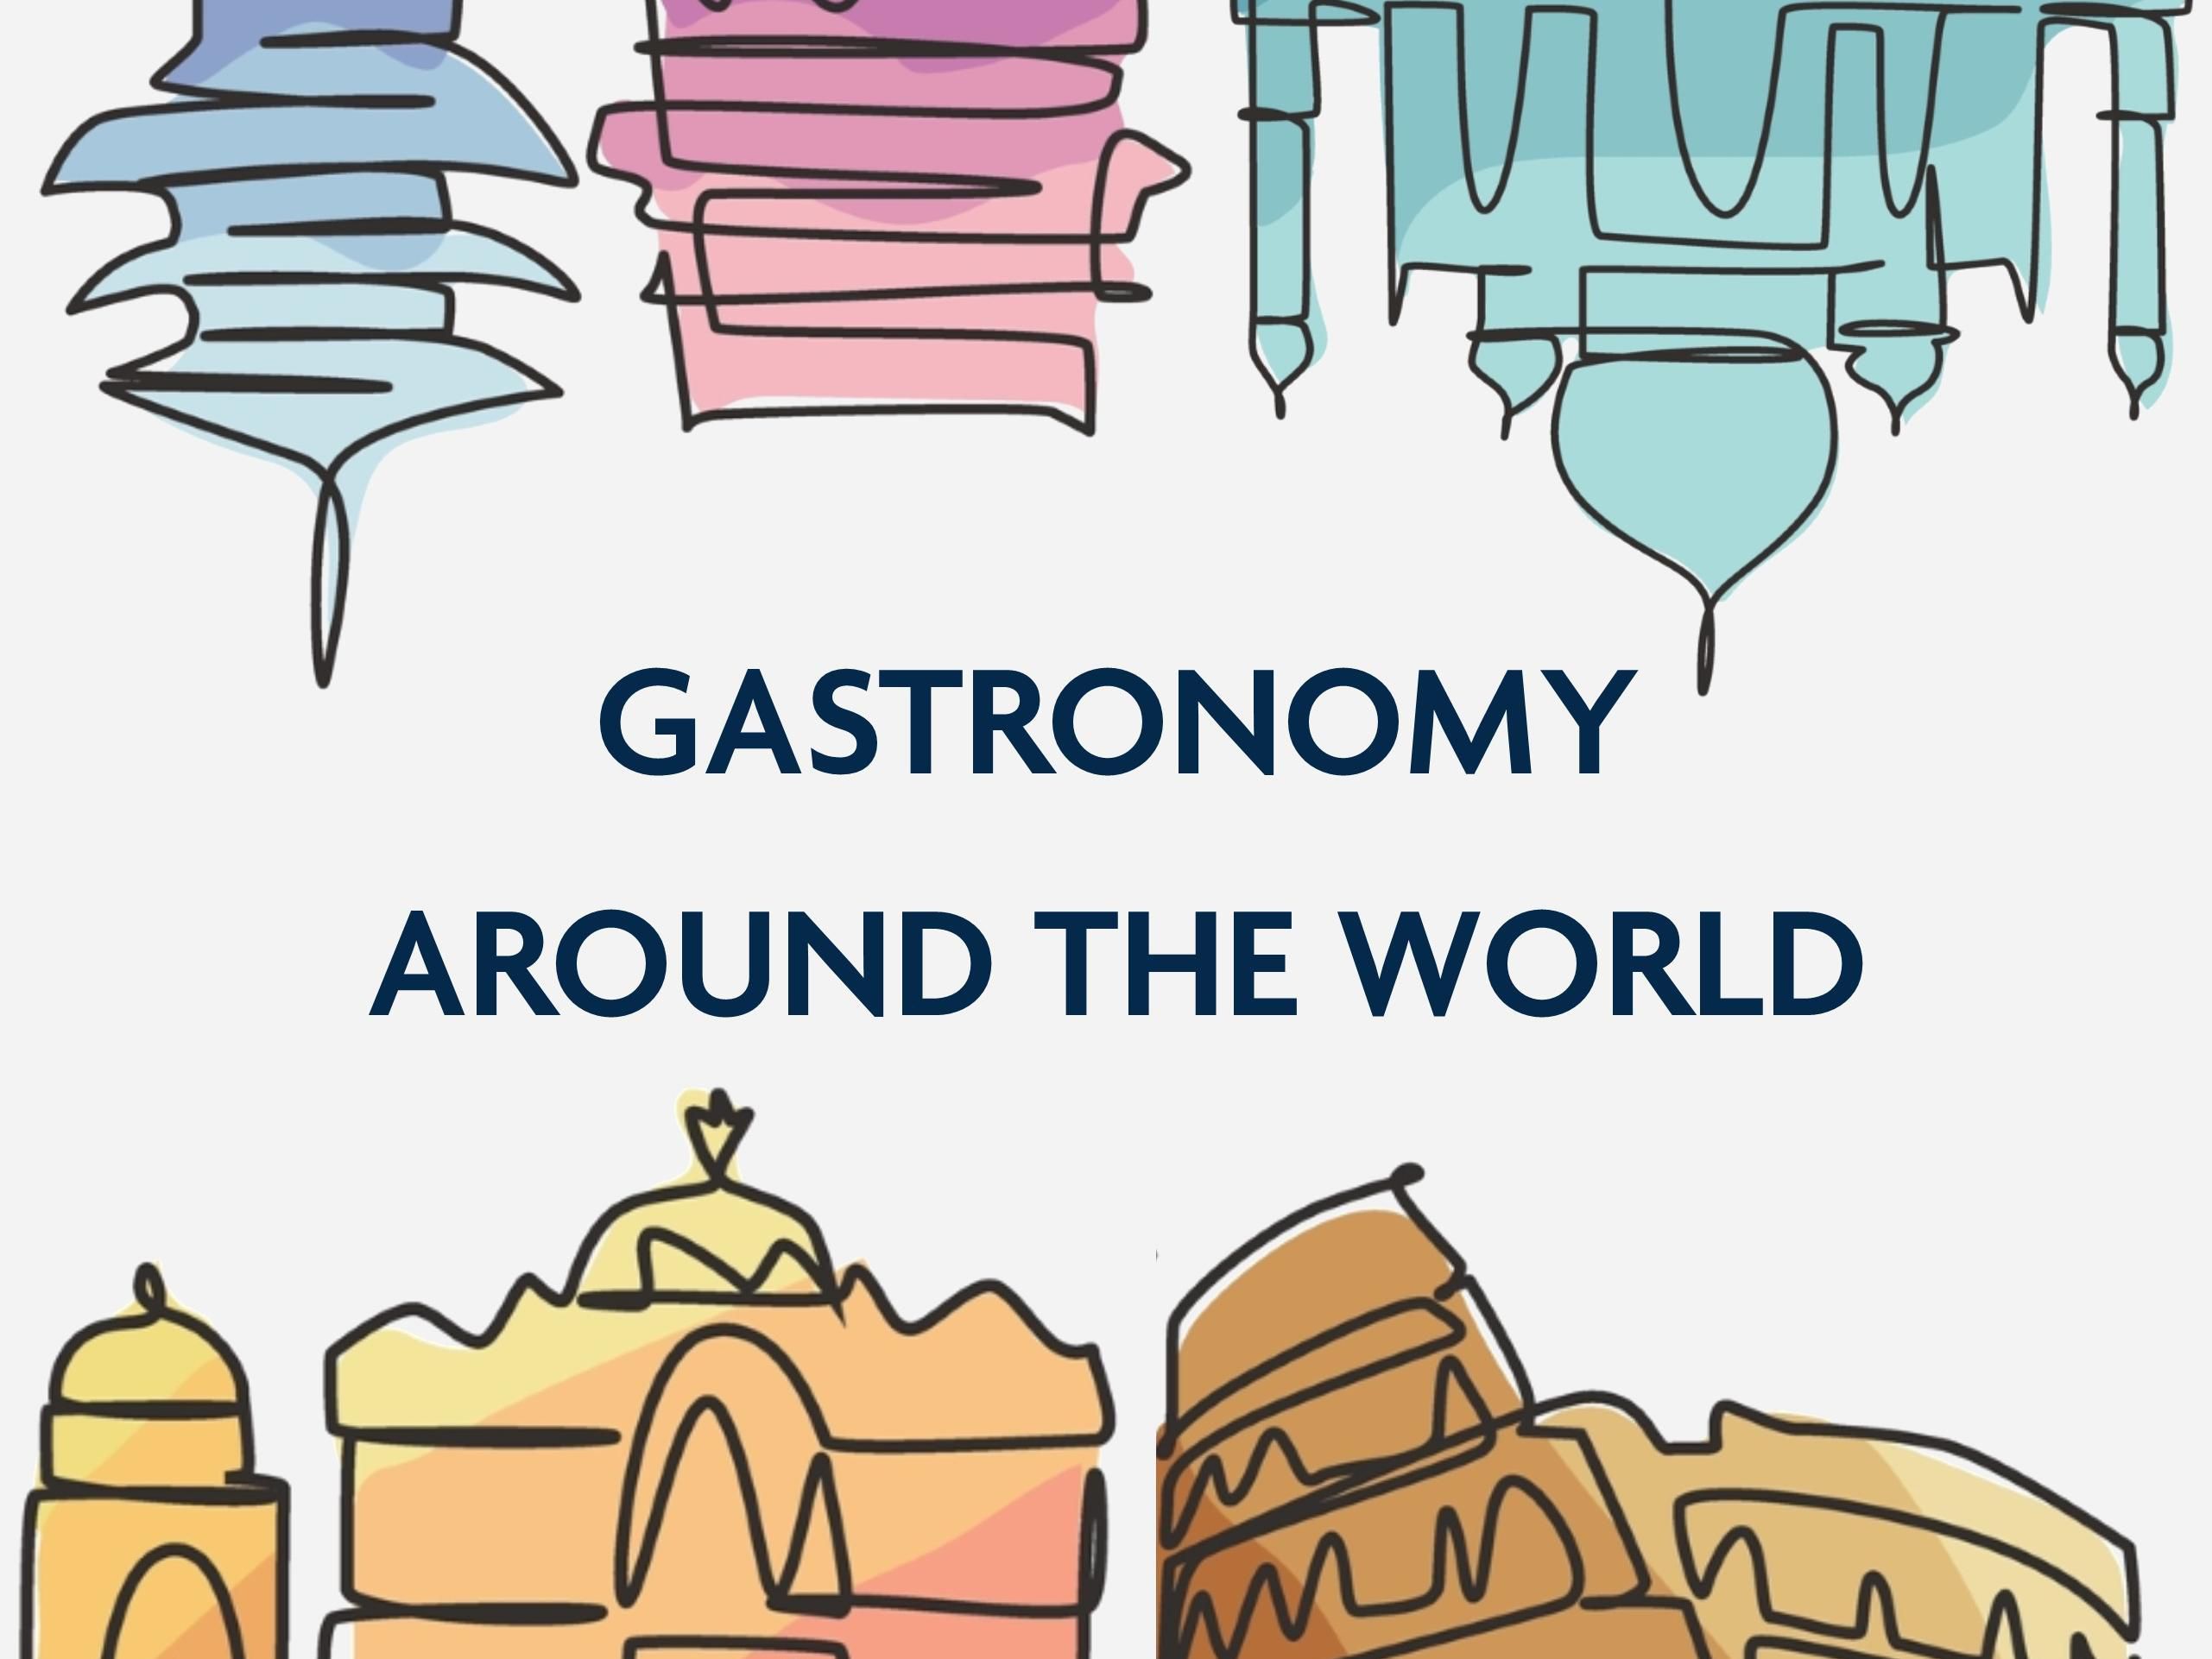 Gastronomy around the world